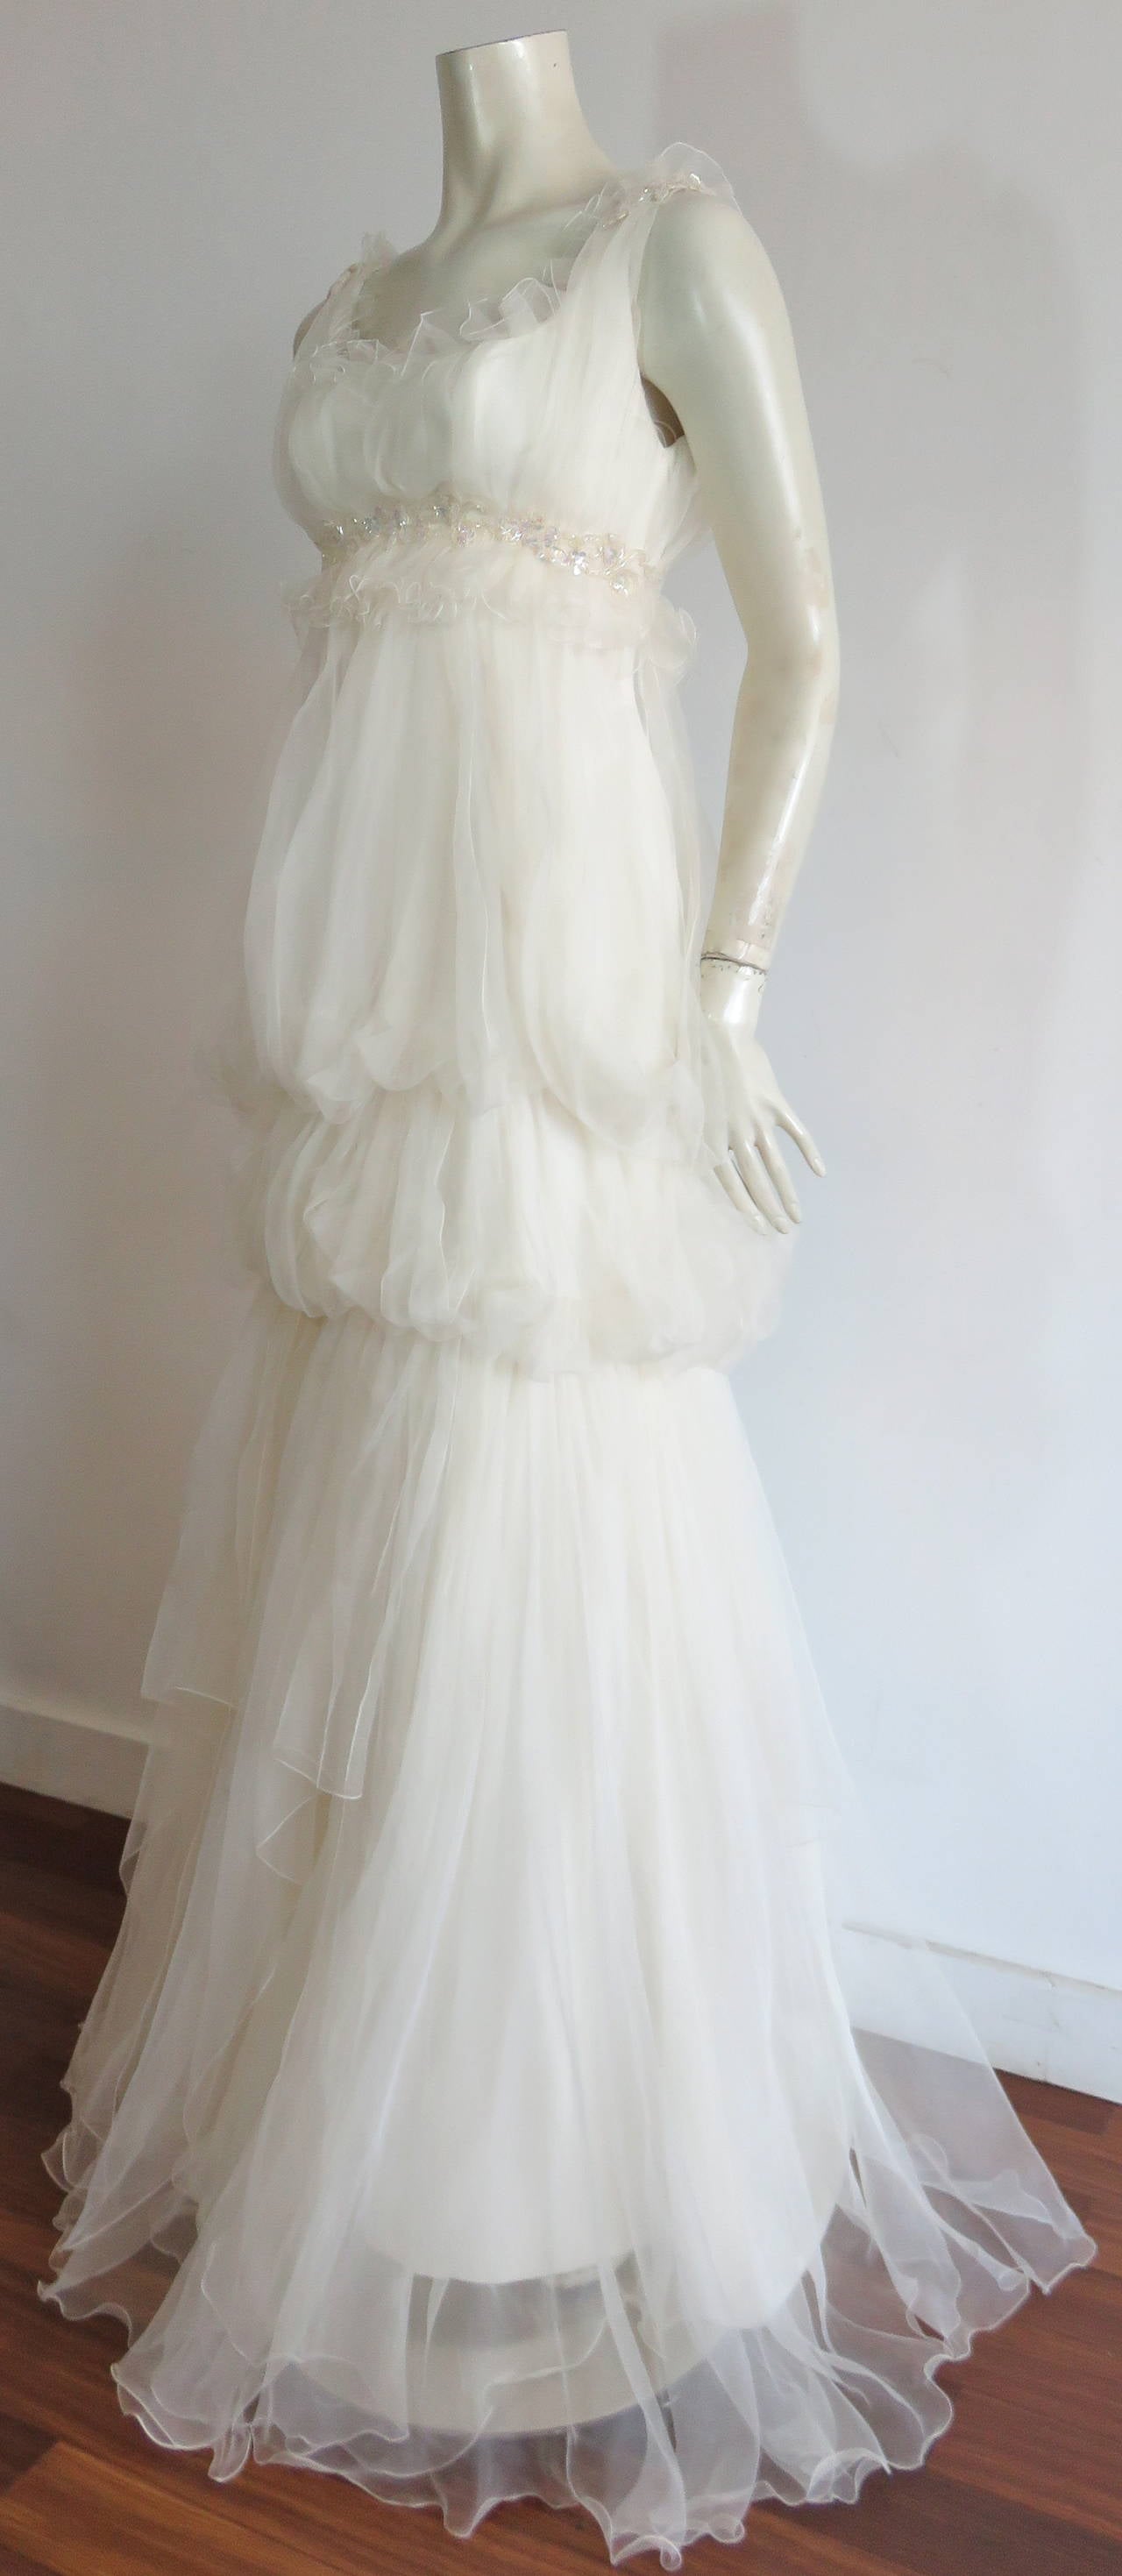 CHRISTIAN LACROIX Silk chiffon wedding dress - New In New Condition For Sale In Newport Beach, CA